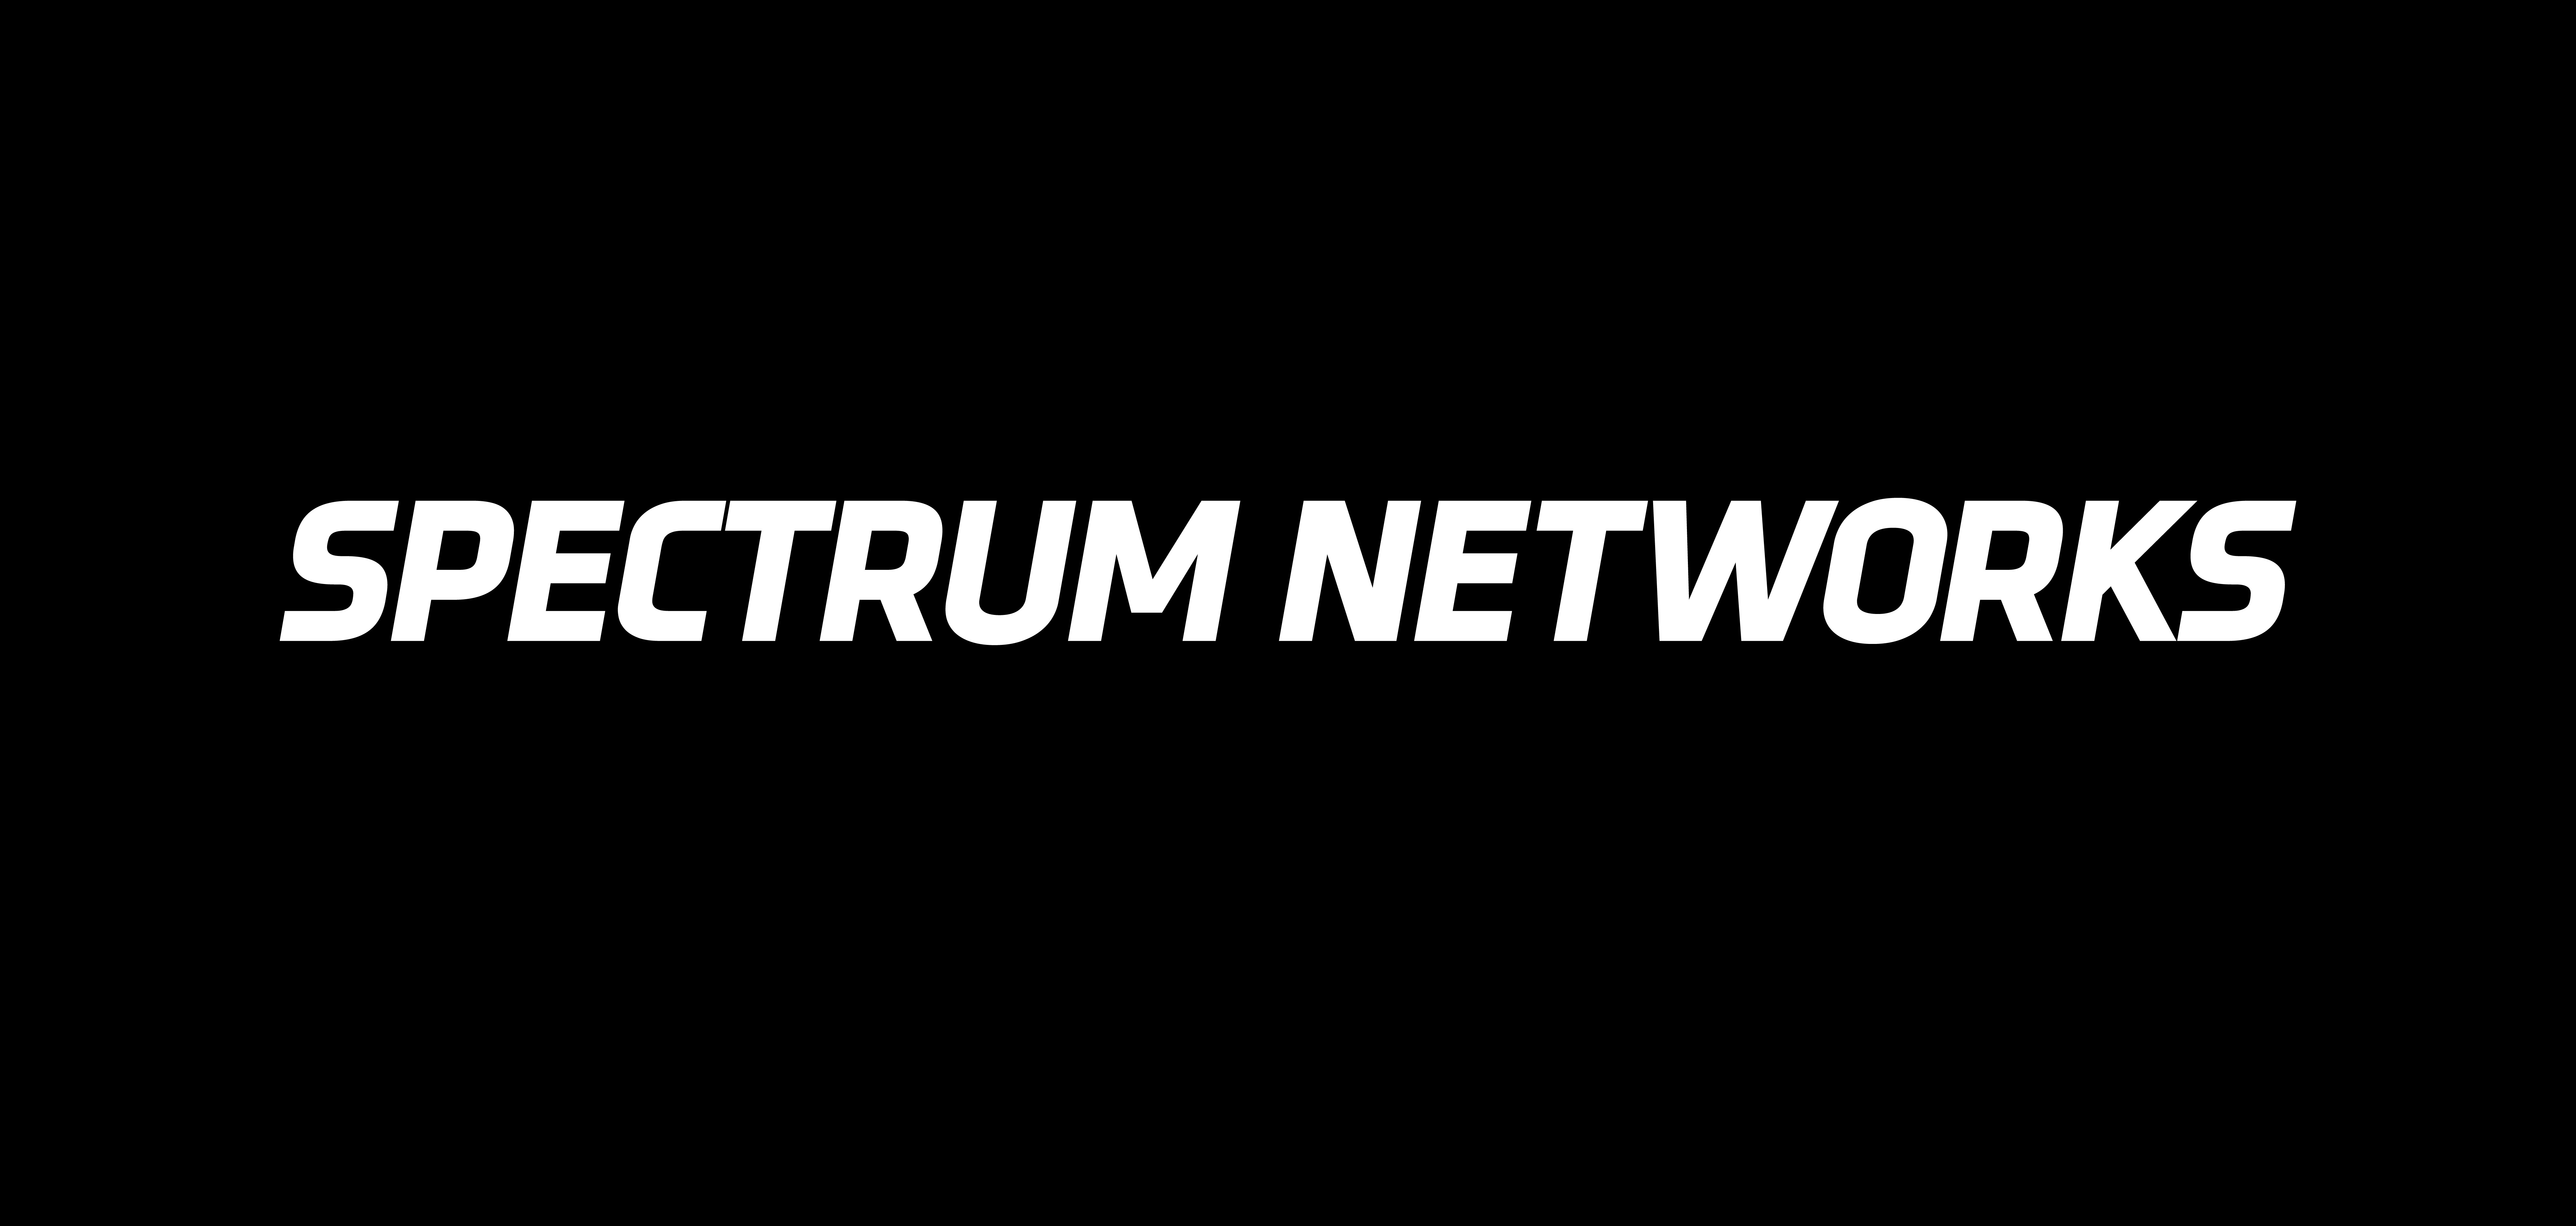 Spectrum Networks | LinkedIn